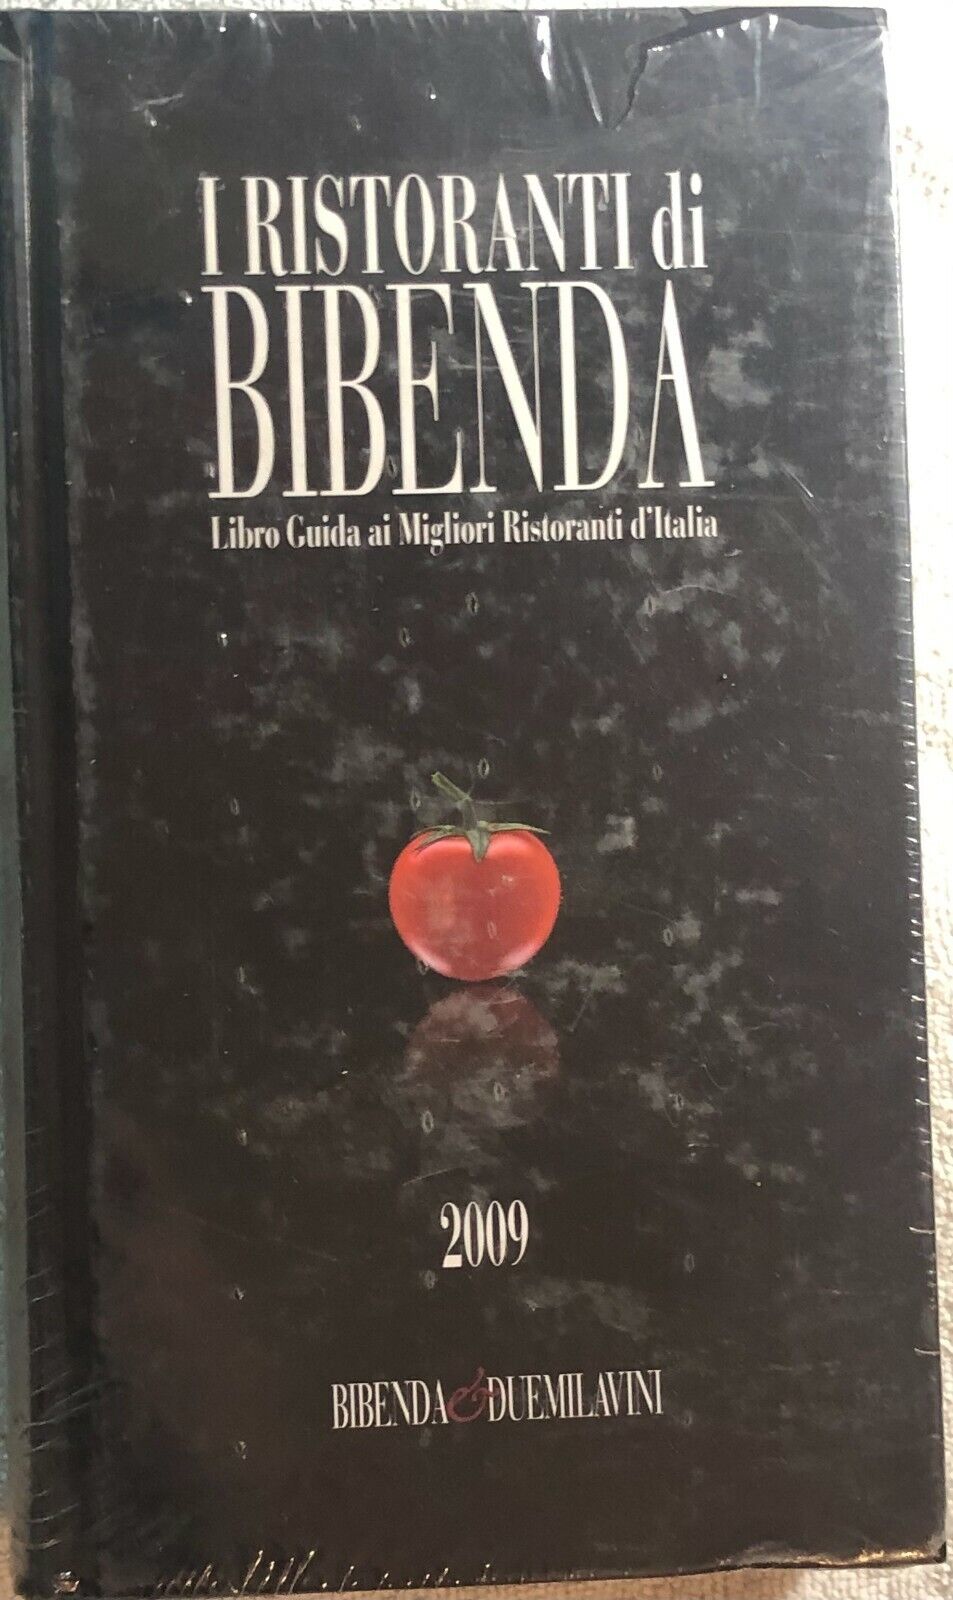 I ristoranti di Bibenda di Aa.vv.,  2009,  Bibenda&duemilavini